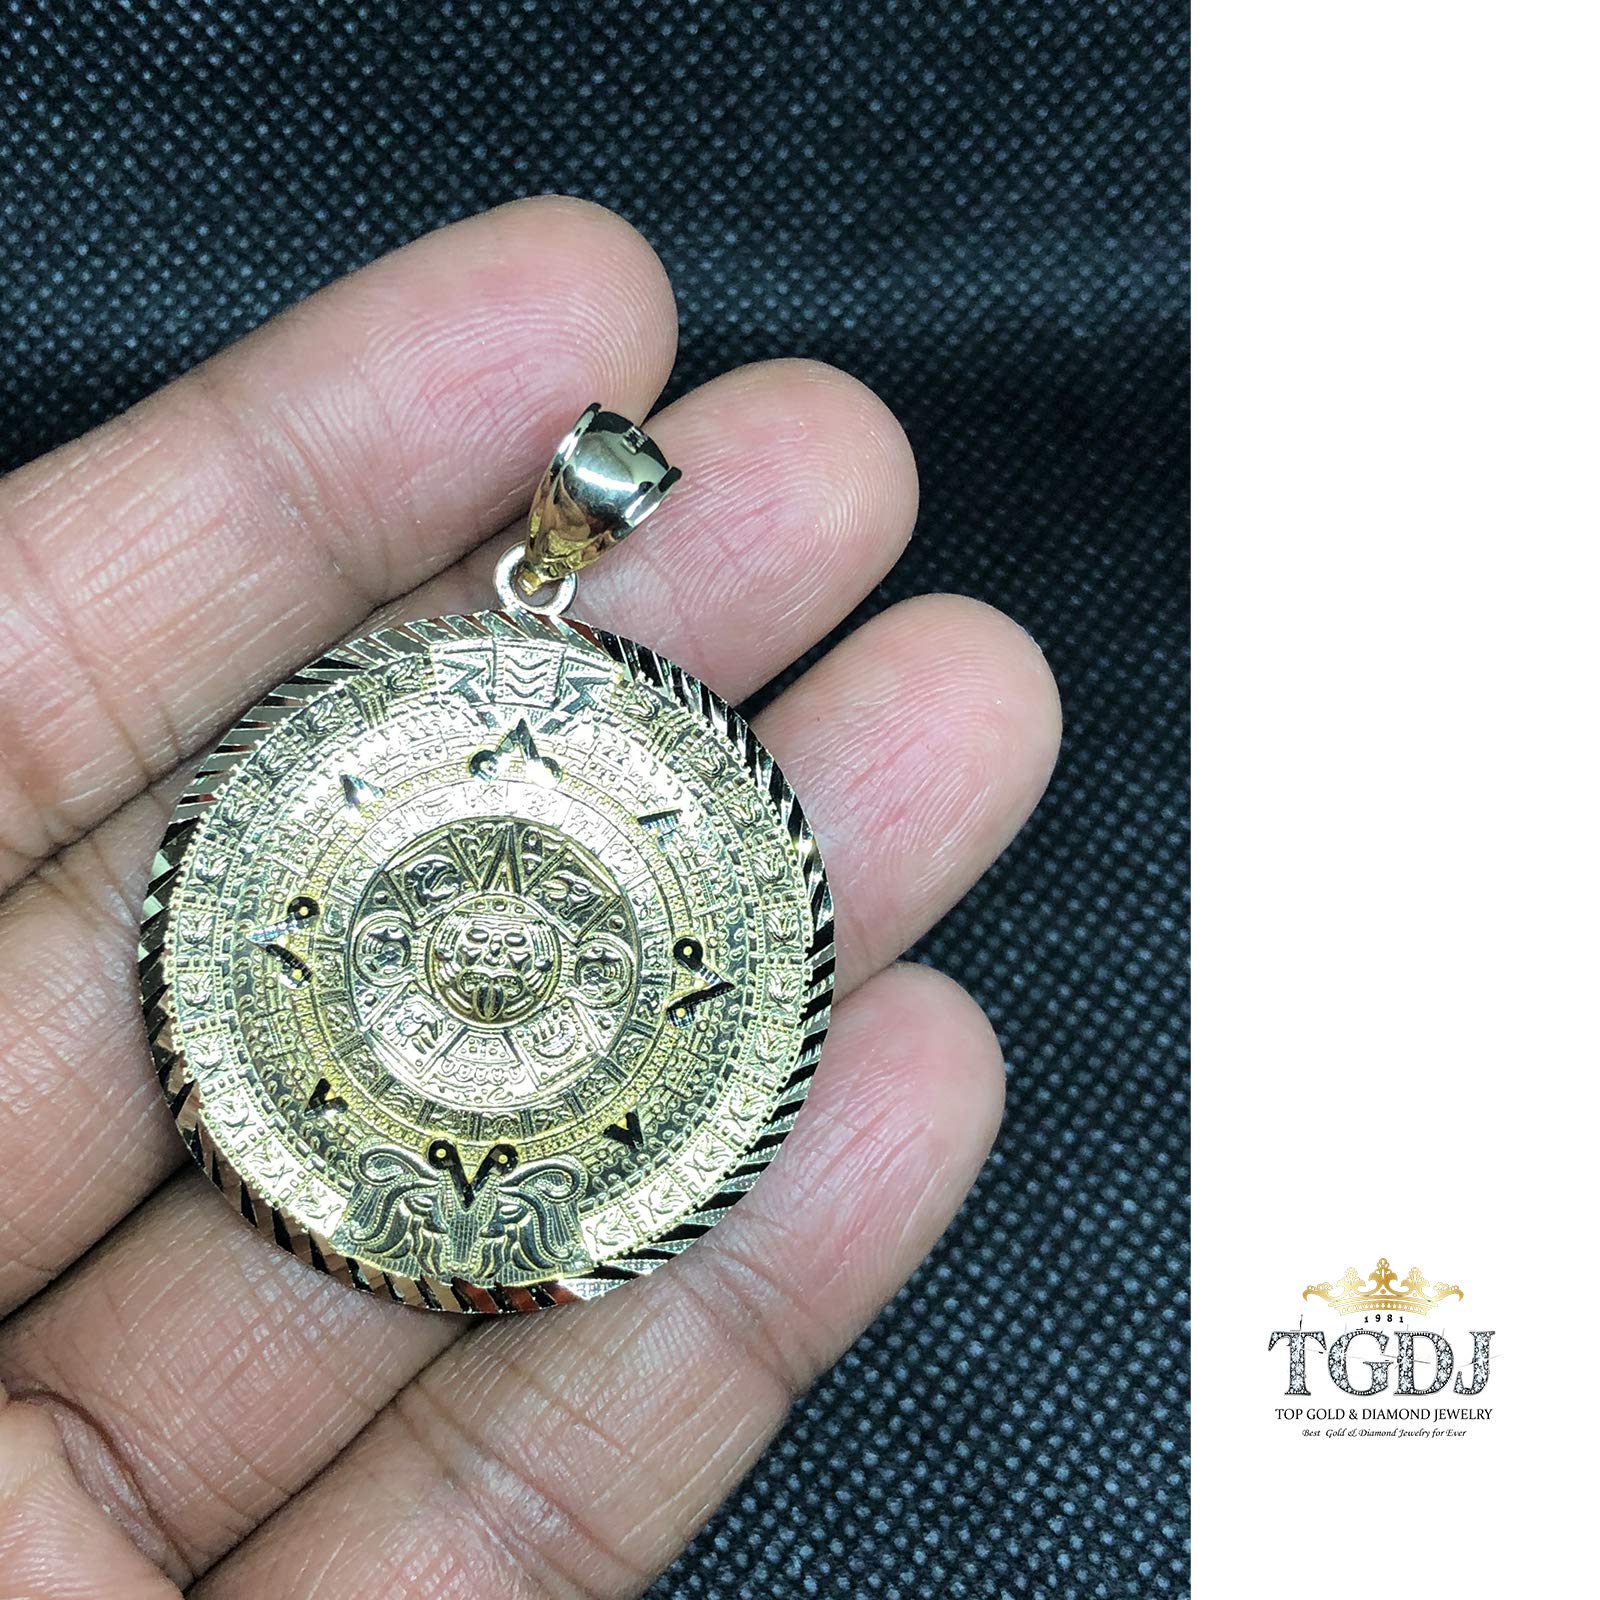 TGDJ 14K Yellow Gold Aztec Mayan Calendar Charm Pendant, 40x40 mm Diamond-Cut Ornate, Handmade Spiritual Symbol, Gold Stamped Fine Jewelry, Great Gift for Men & Women (40mm)